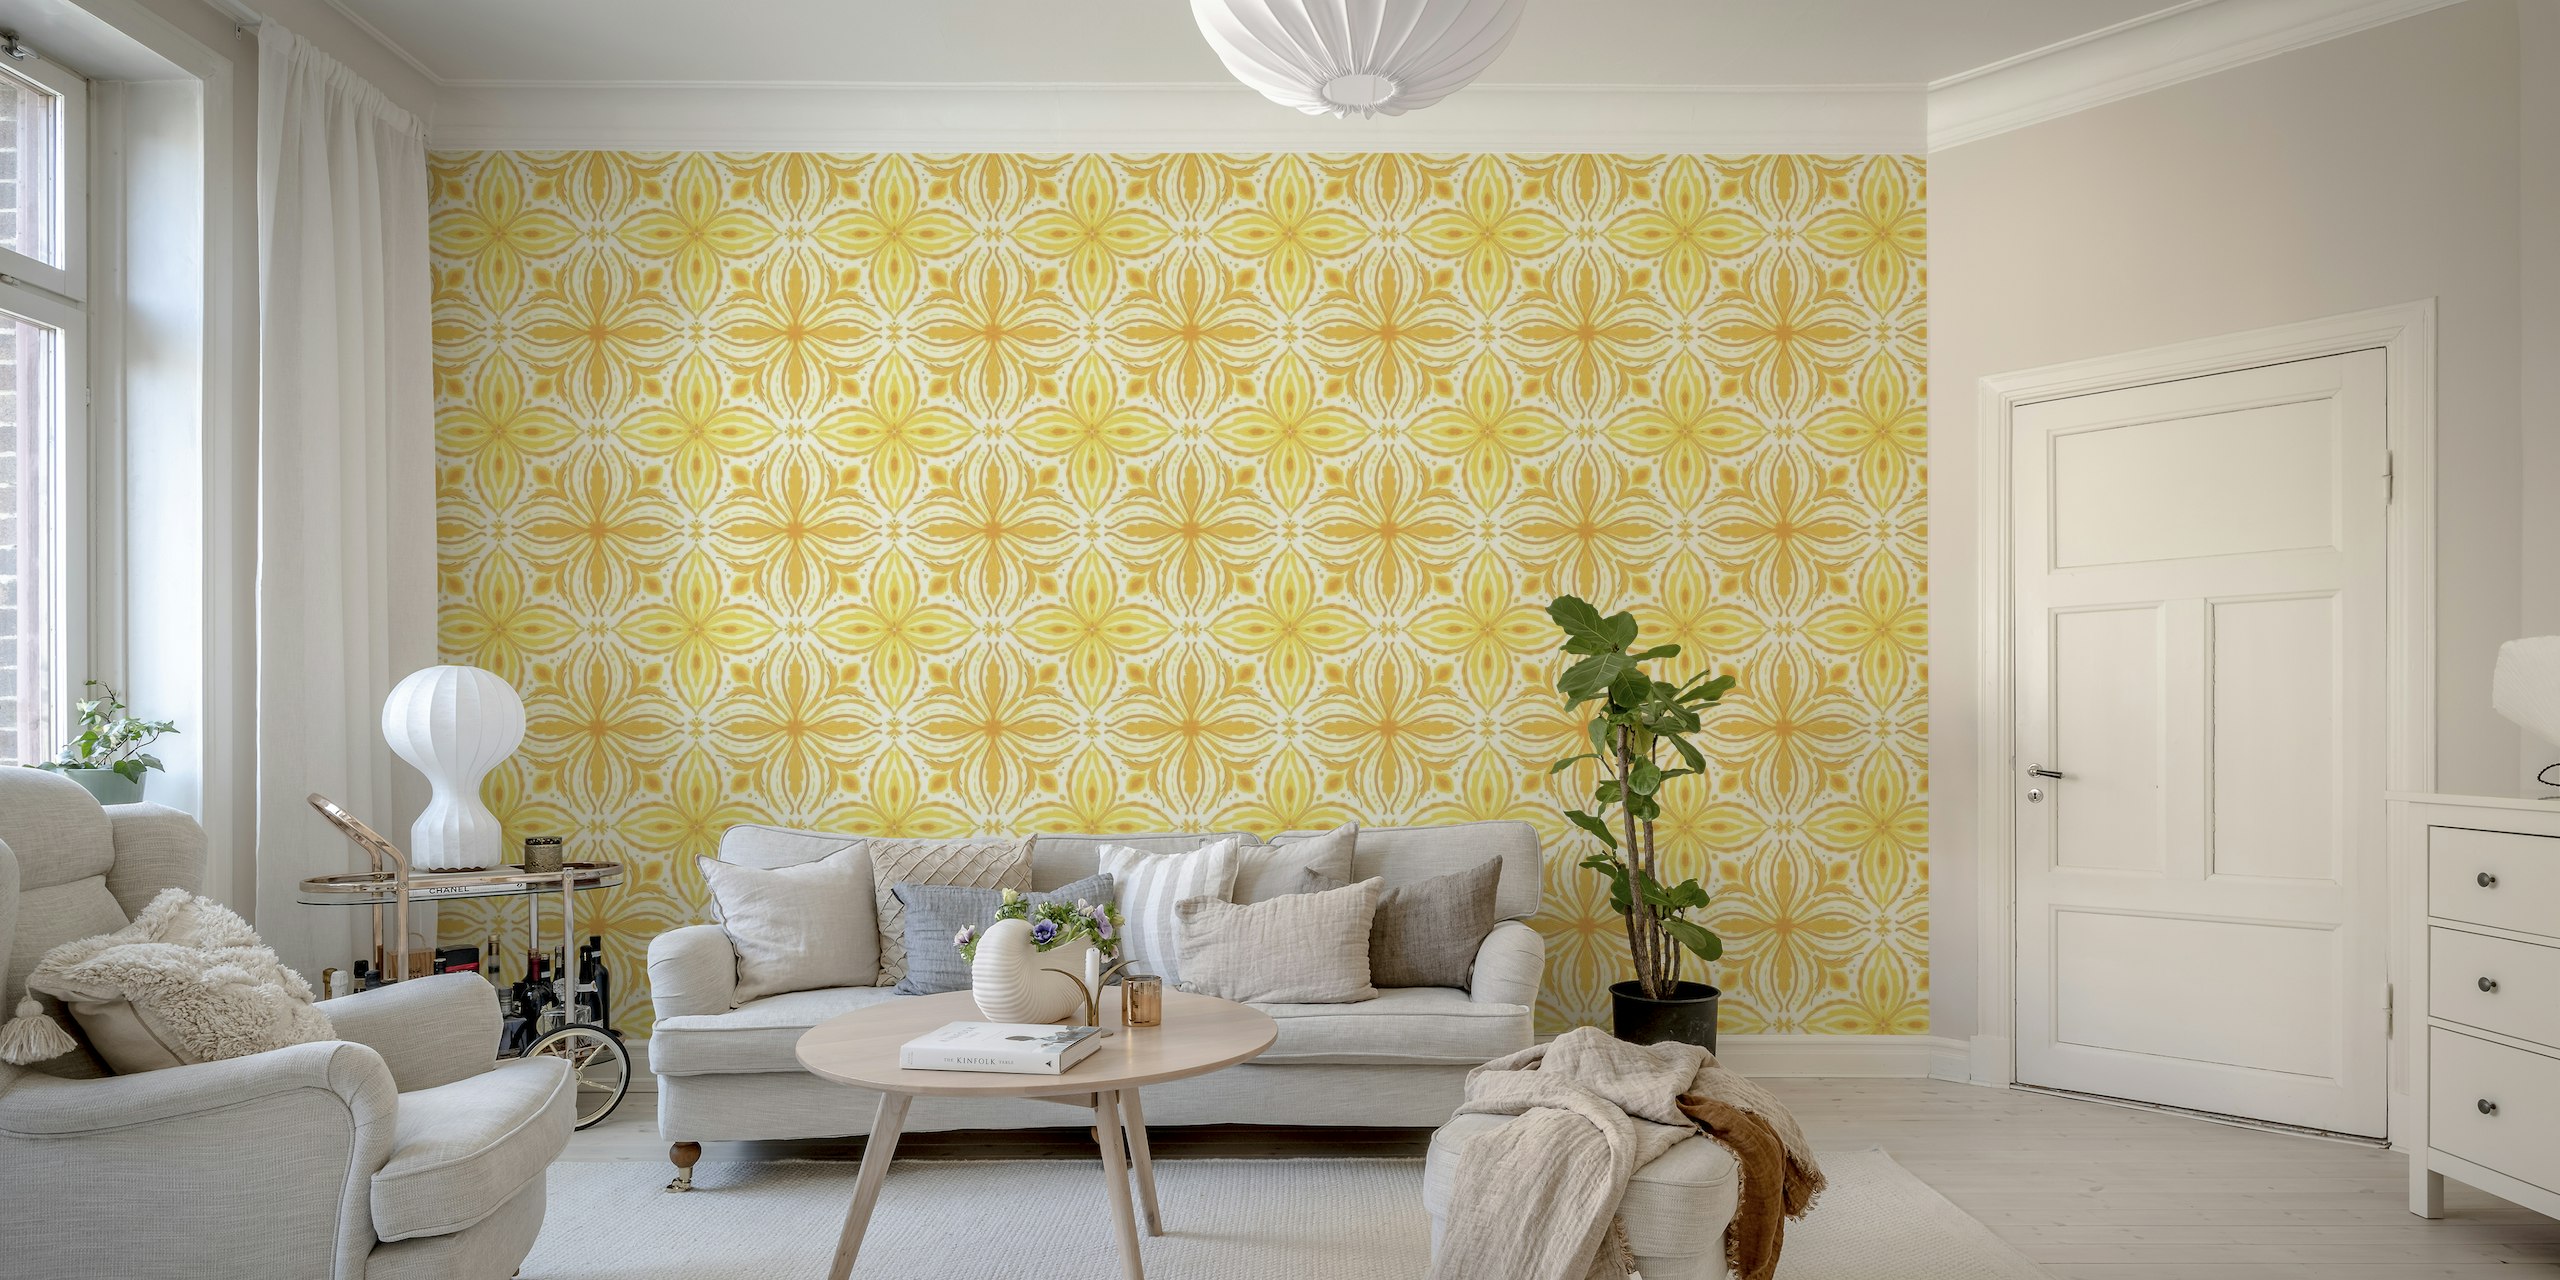 Ornate tiles, yellow and orange 9 wallpaper